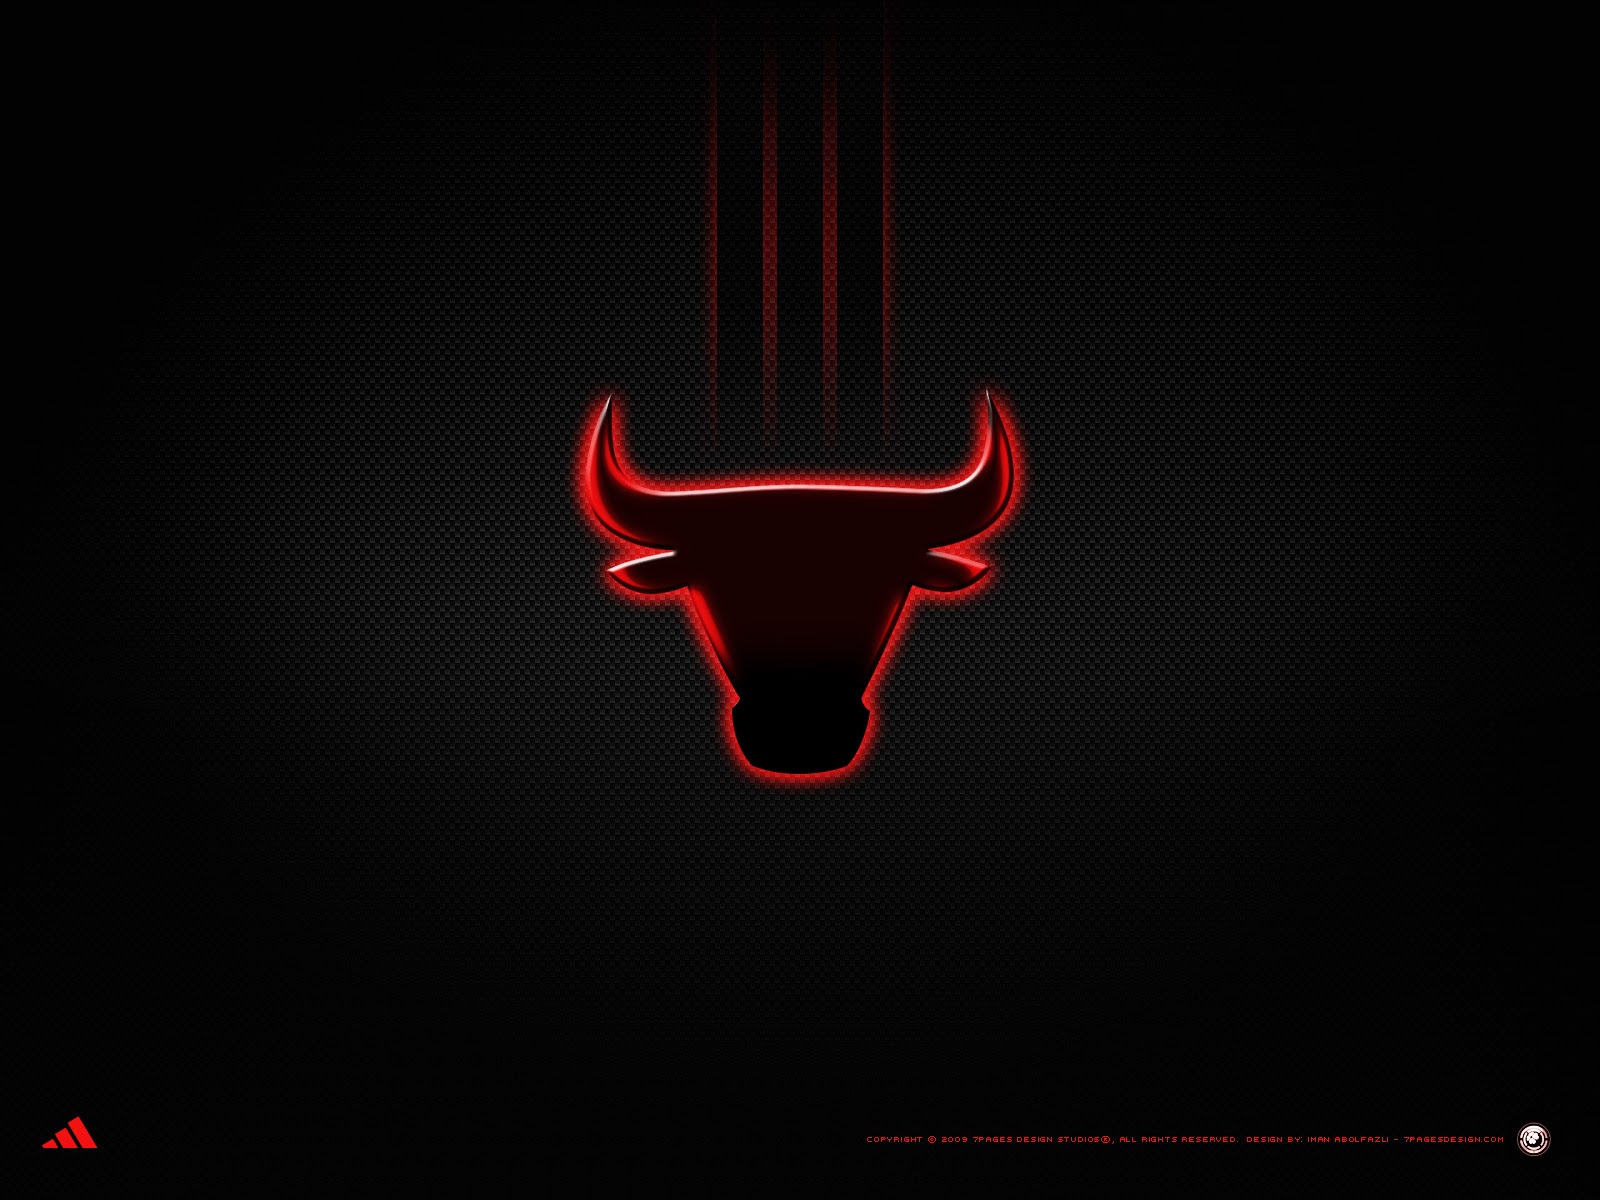 Chicago Bulls Logo Wallpaper Black Image Amp Pictures Becuo